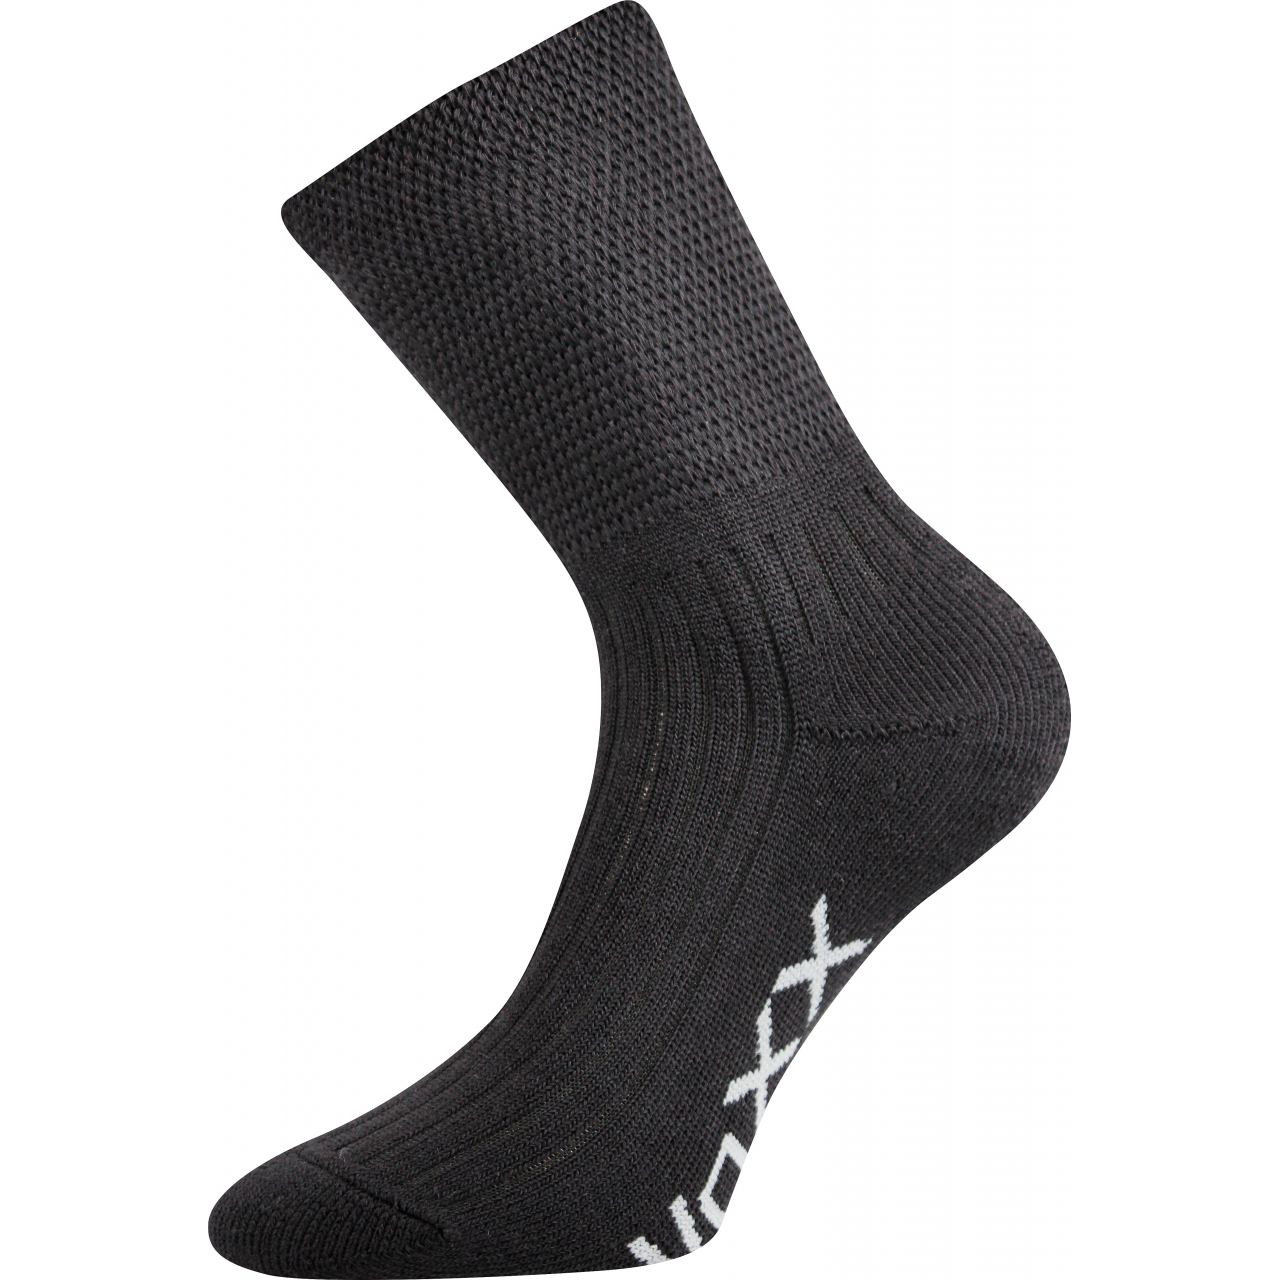 Ponožky unisex froté Voxx Stratos - černé, 35-38